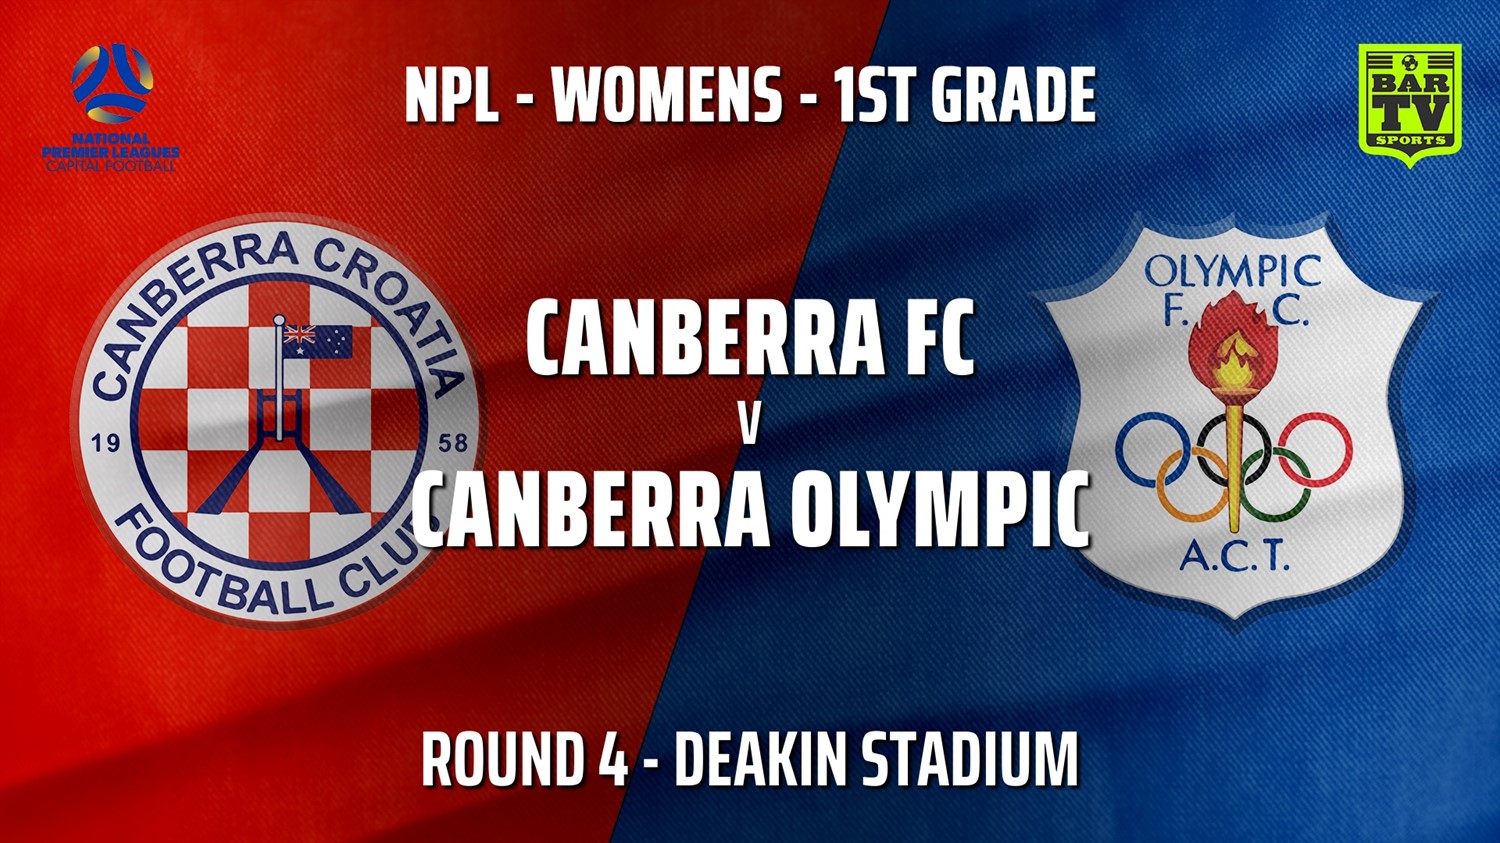 210501-NPLW - Capital Round 4 - Canberra FC (women) v Canberra Olympic FC (women) Minigame Slate Image